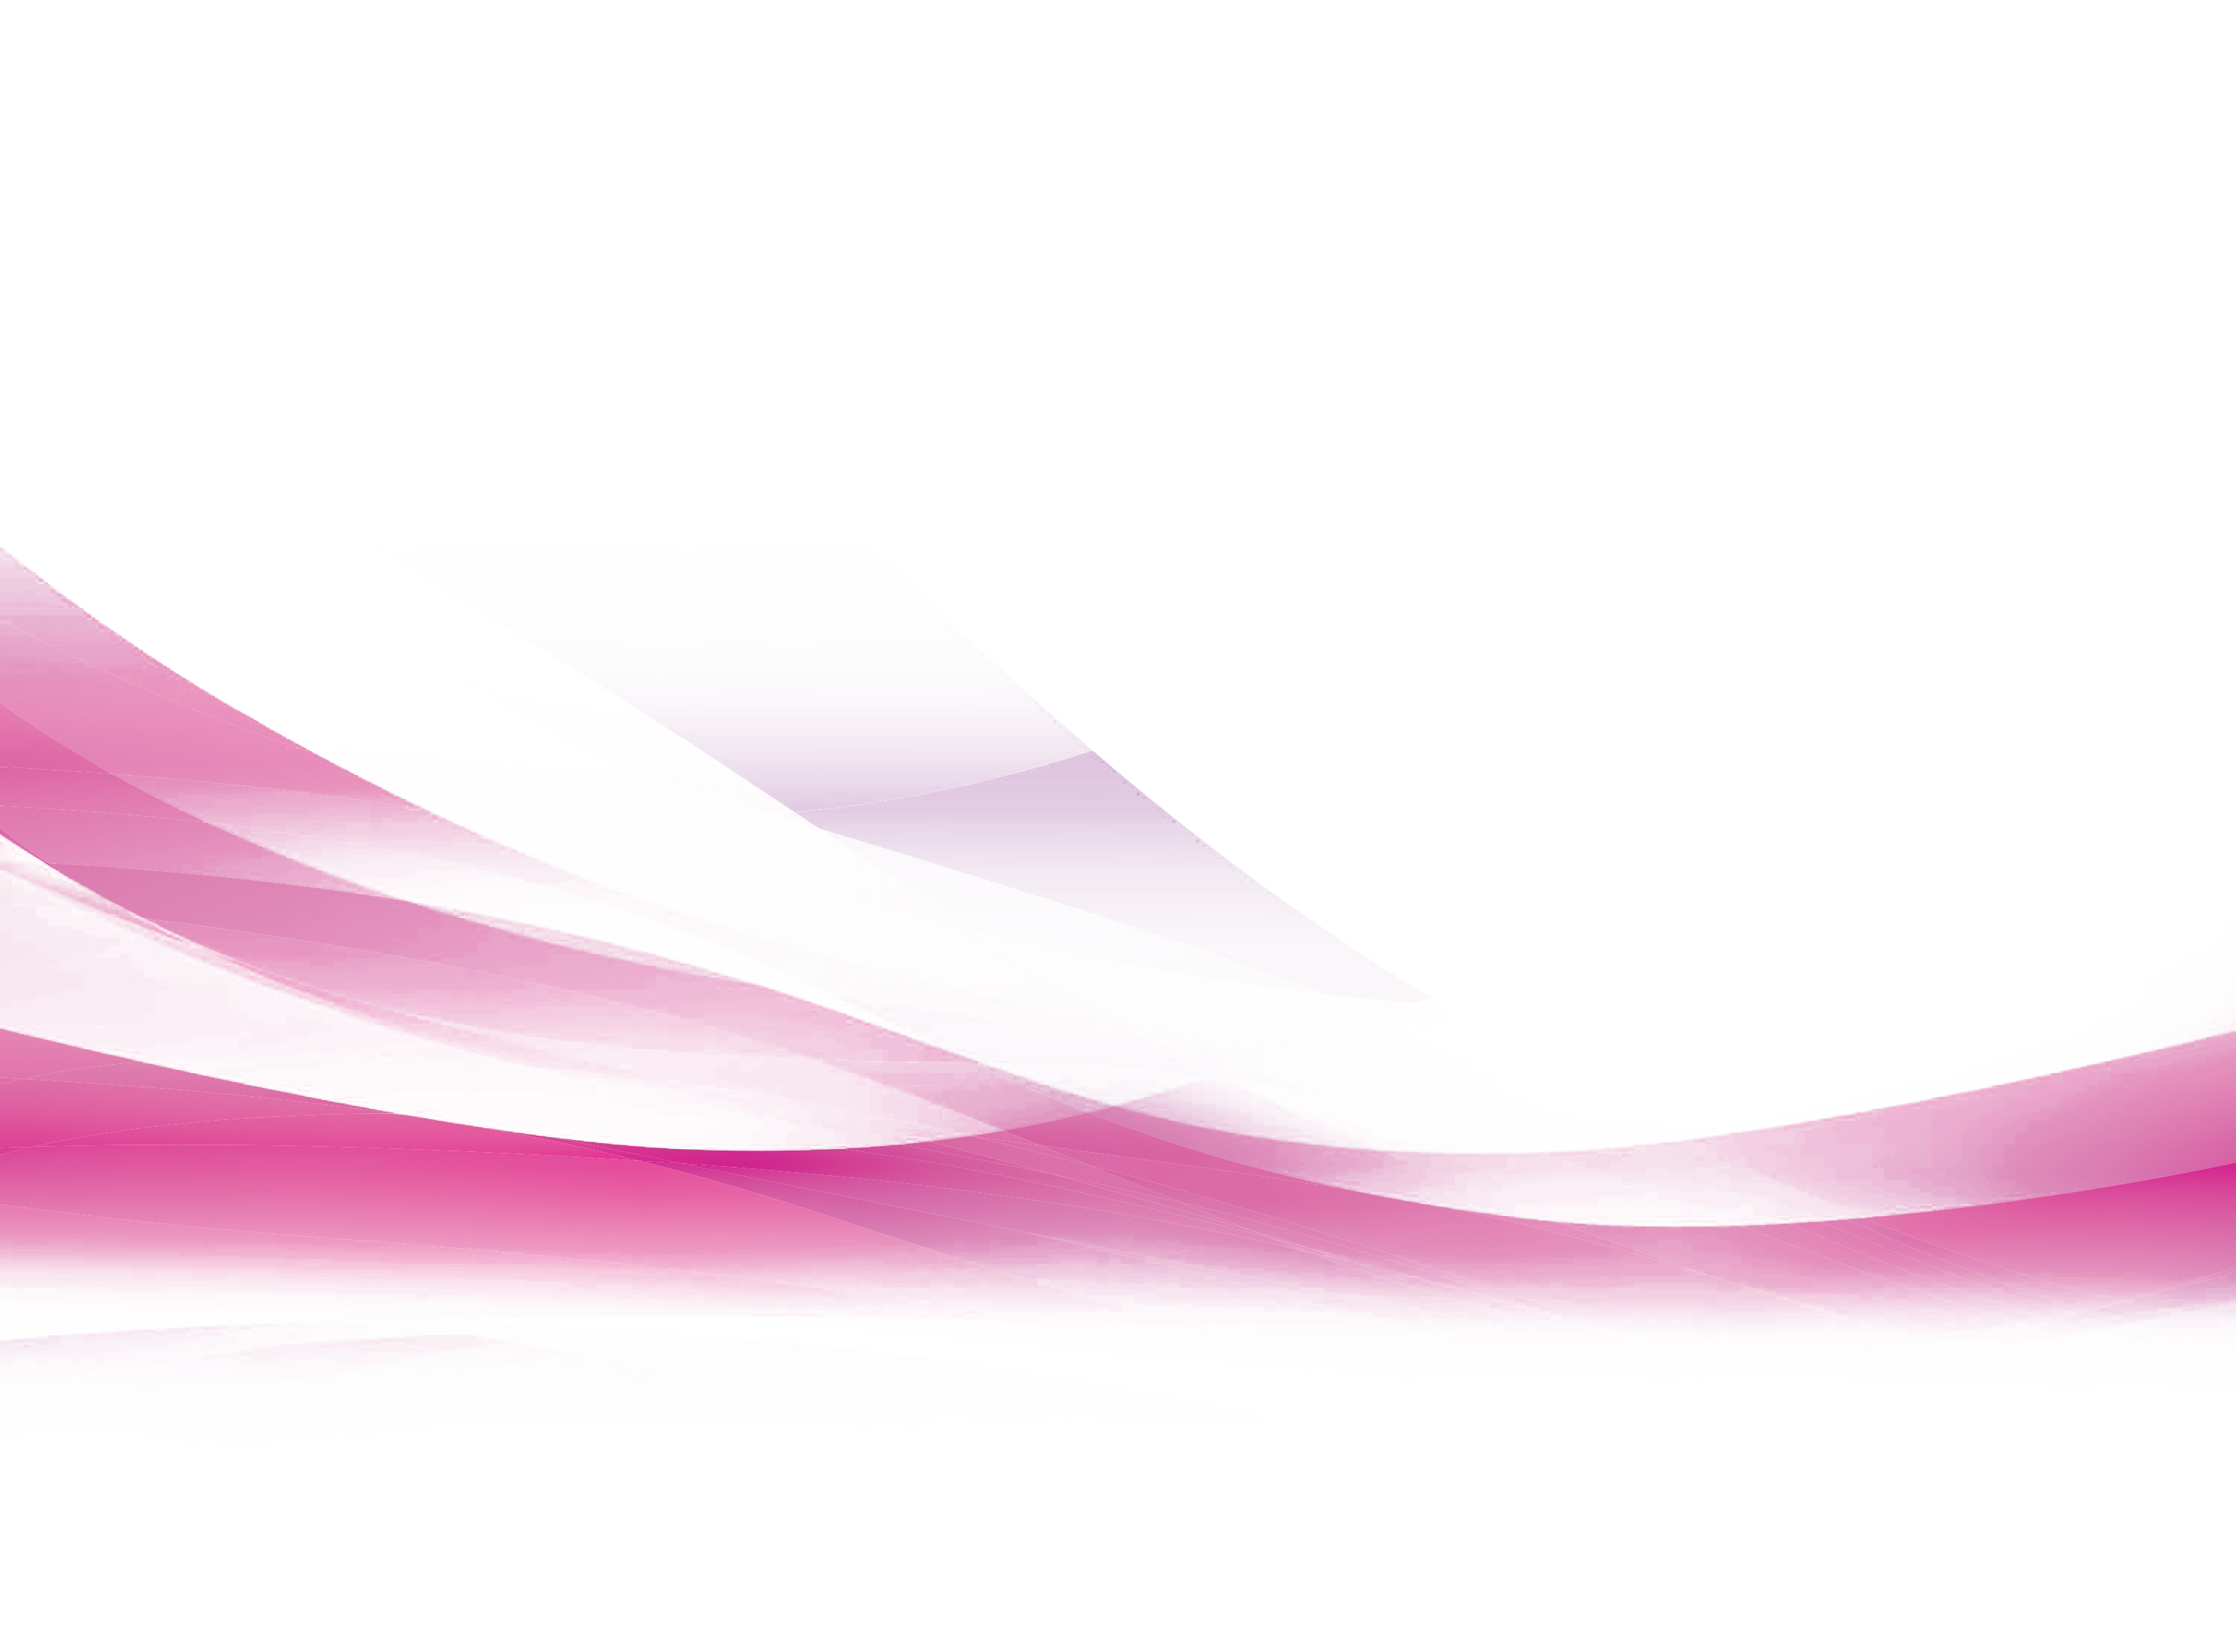 Imagen PNG de onda púrpura